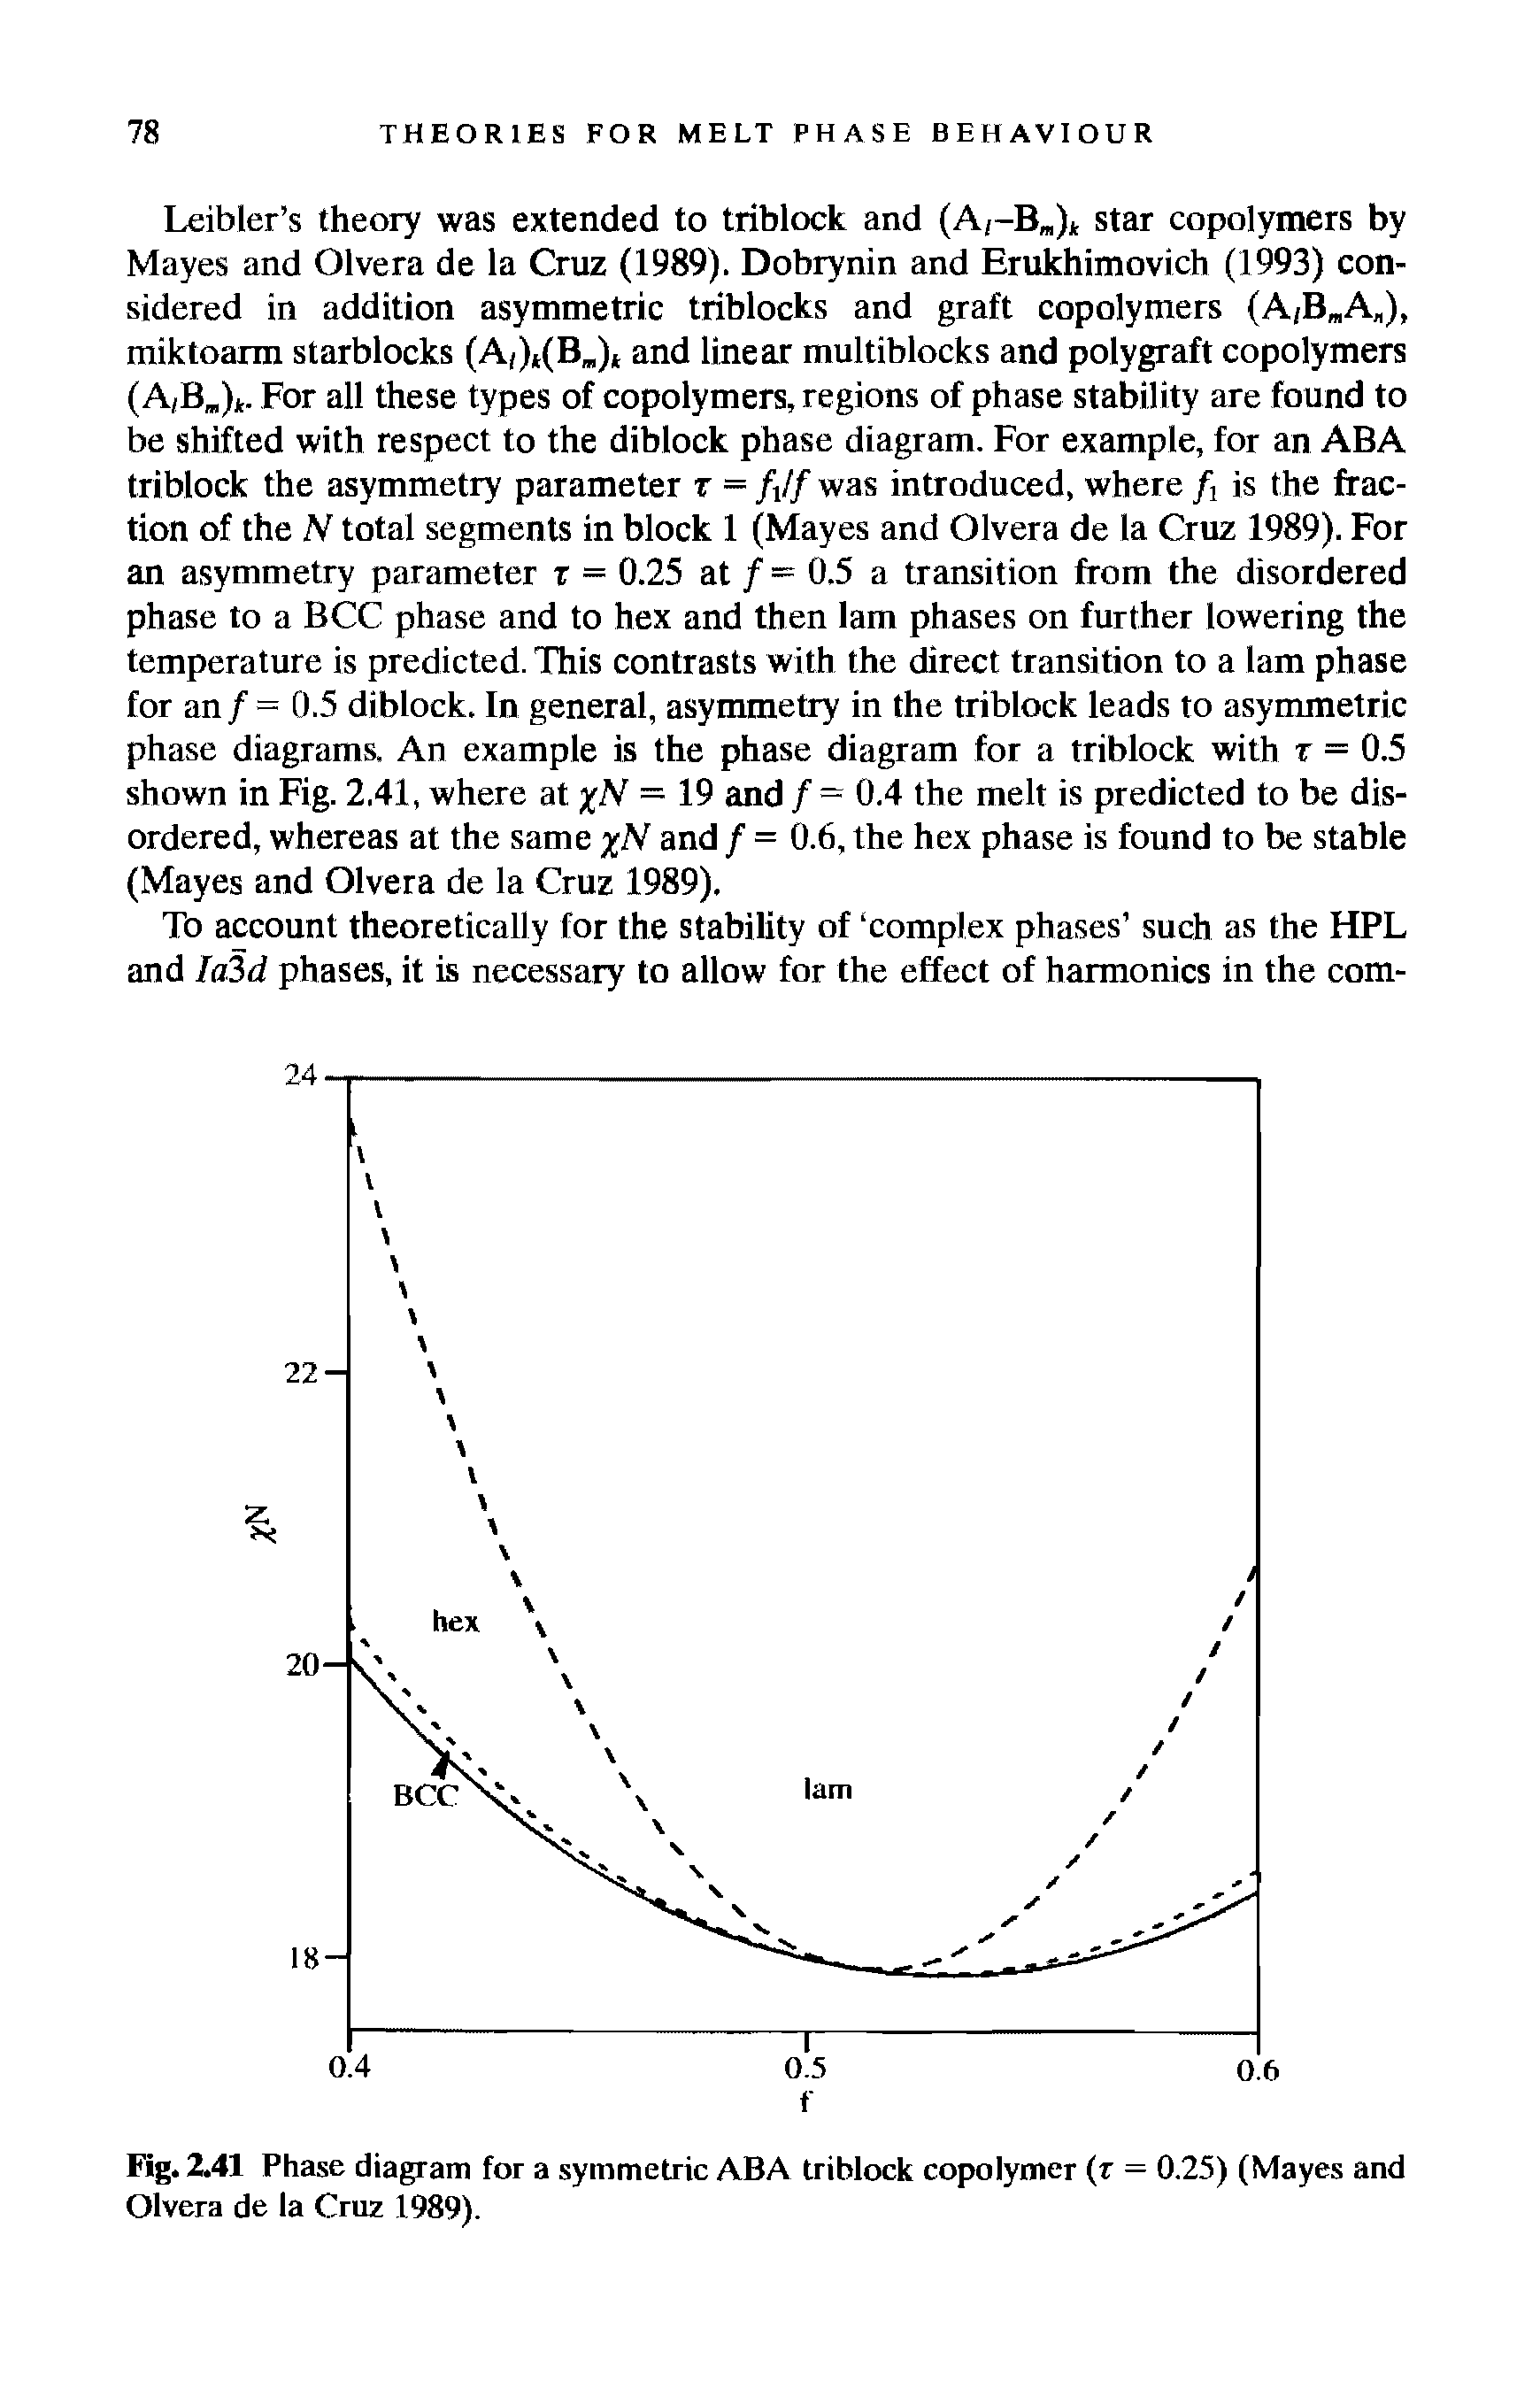 Fig. Z41 Phase diagram for a symmetric ABA triblock copolymer (x = 0.25) (Mayes and Olvera de la Cruz 1989).